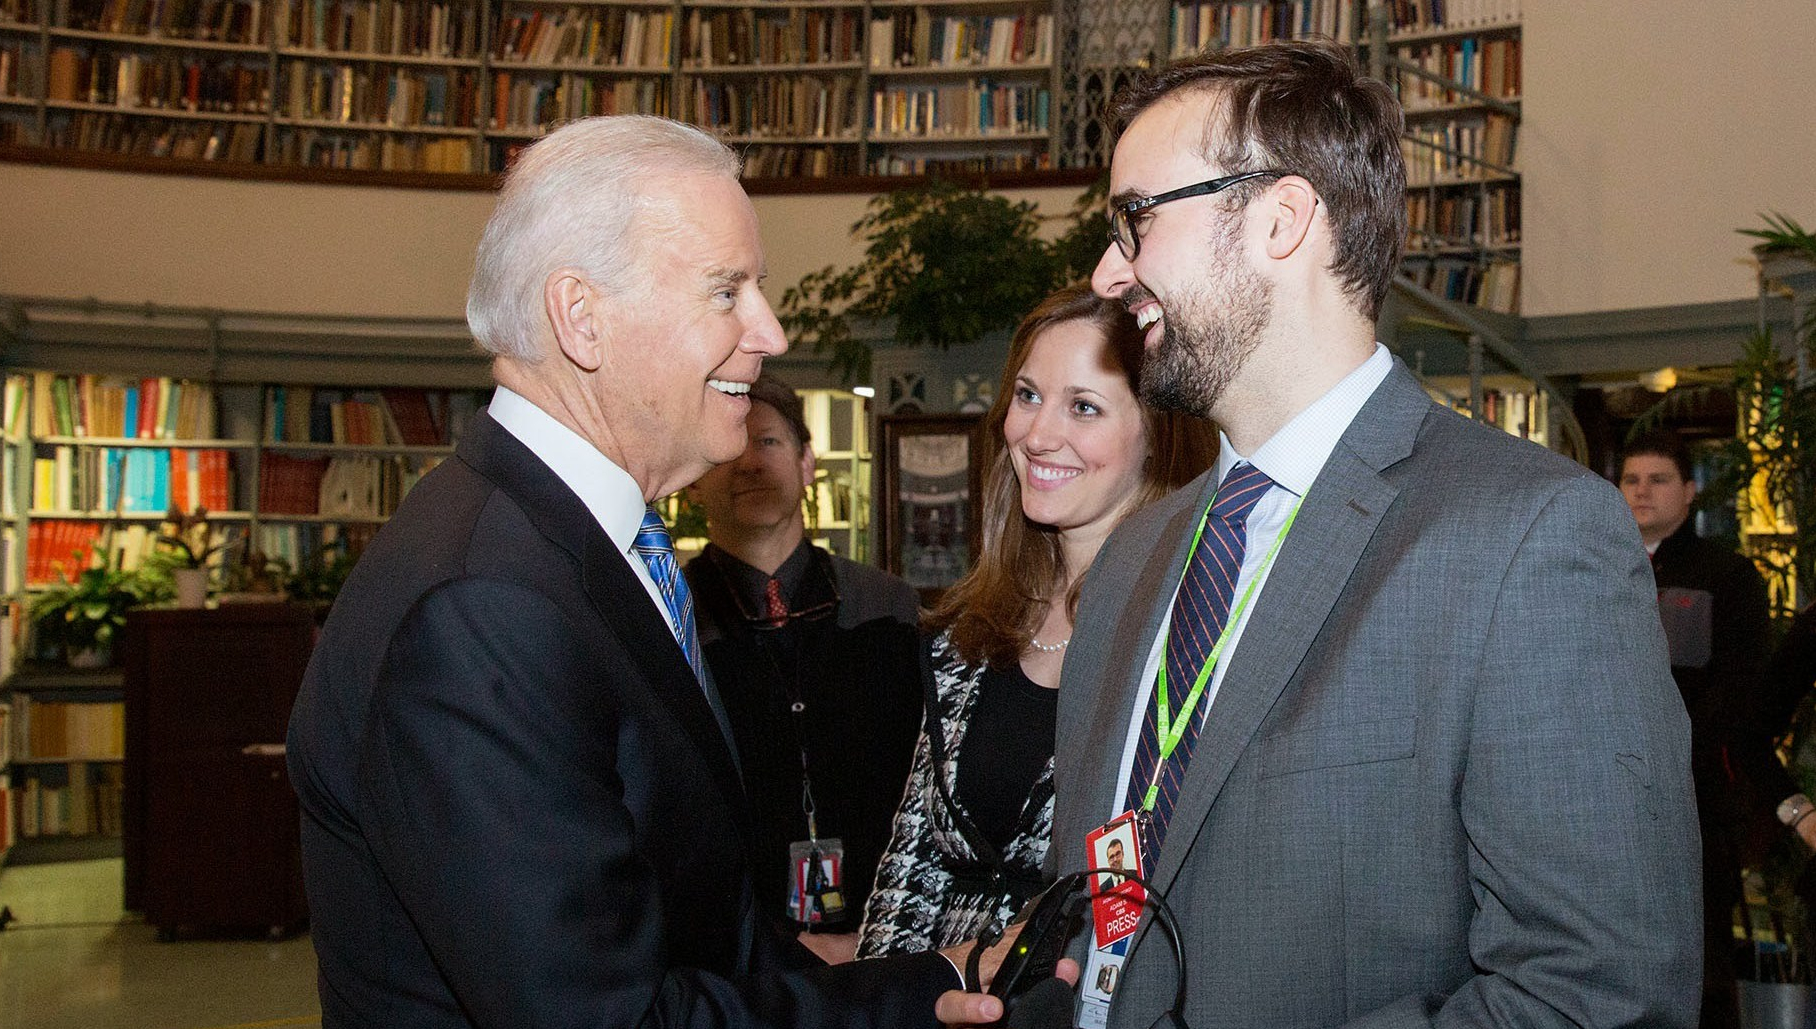 Adam with Vice President Joe Biden